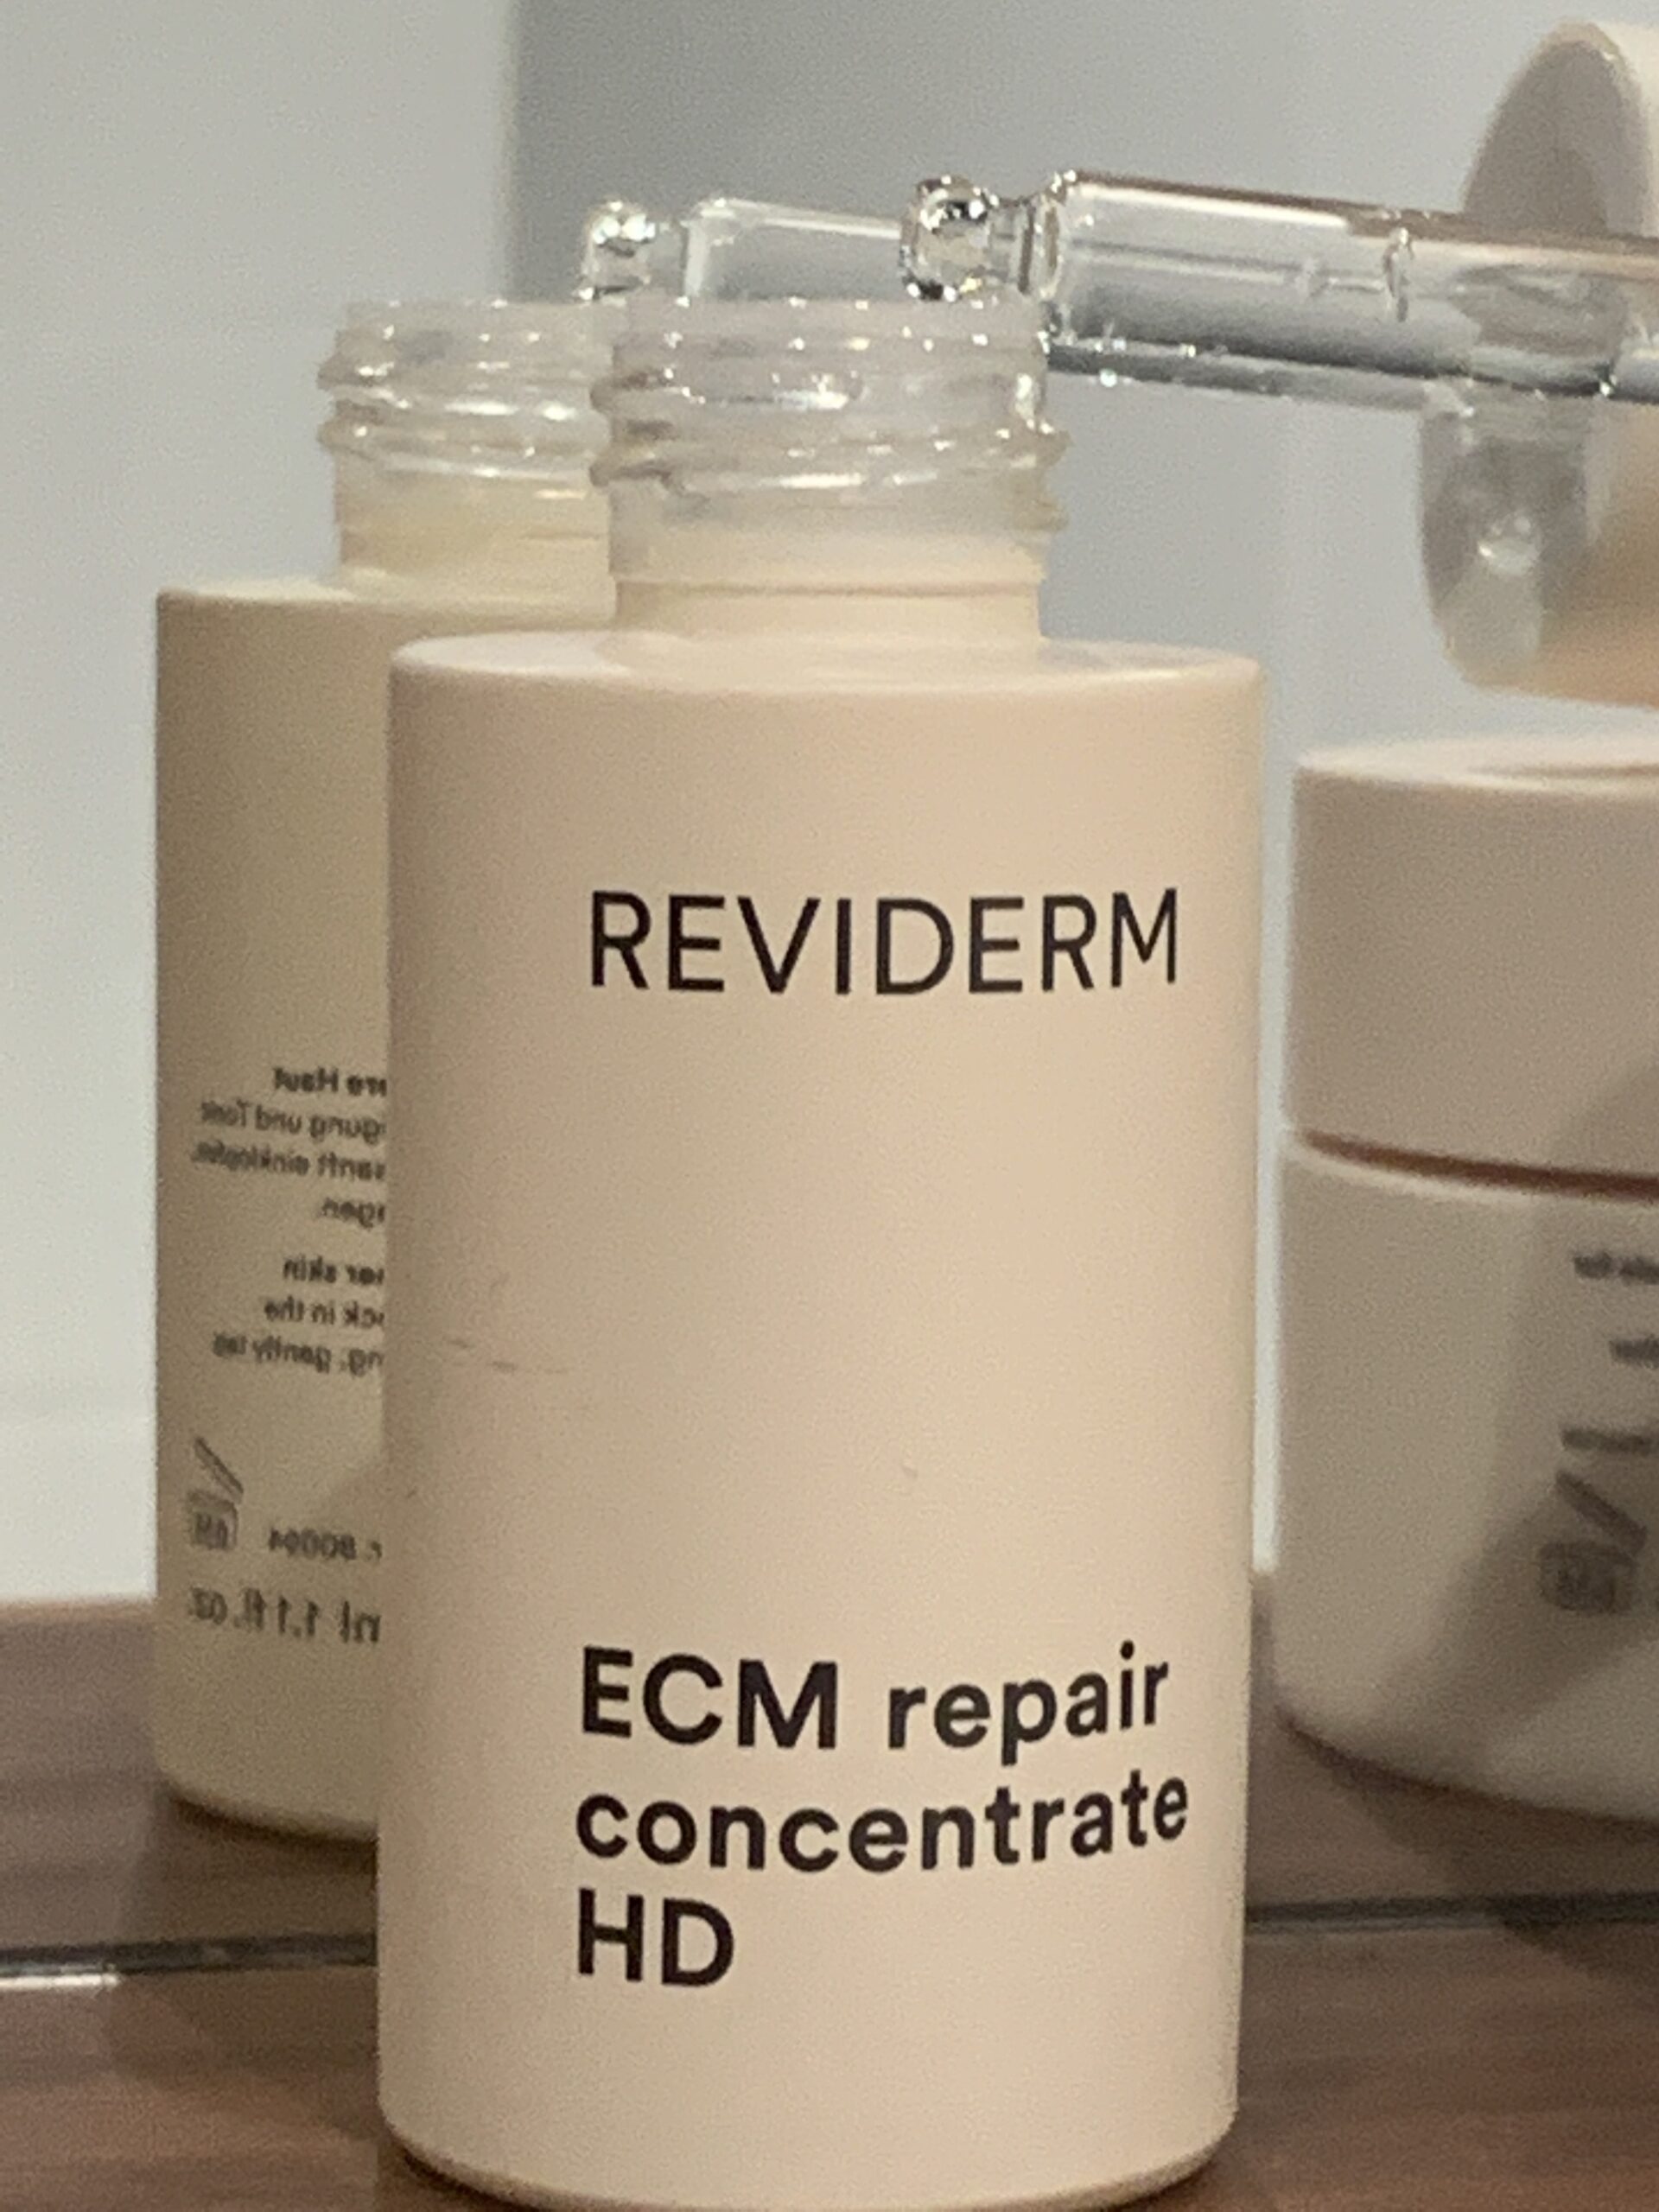 Reviderm ECM repair concentrate HD